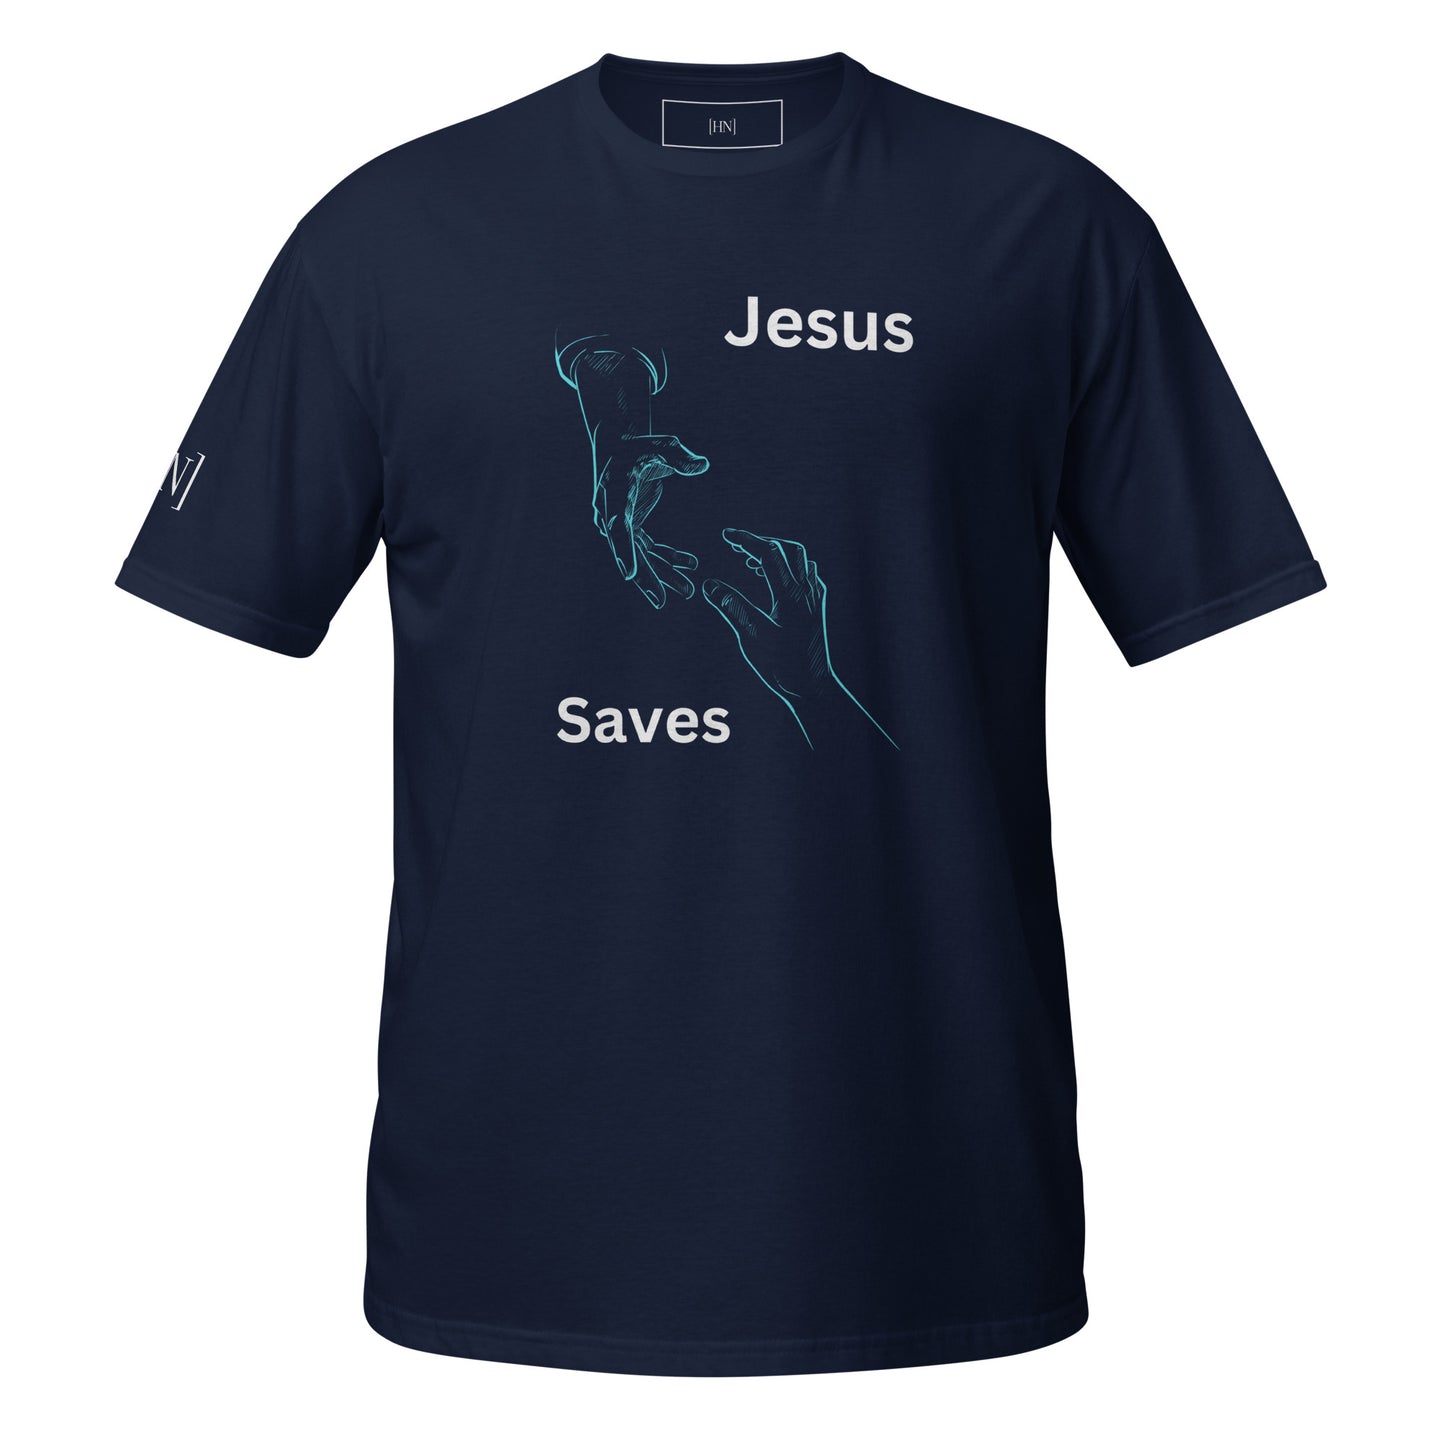 Unisex Dark Jesus Saves T-Shirt